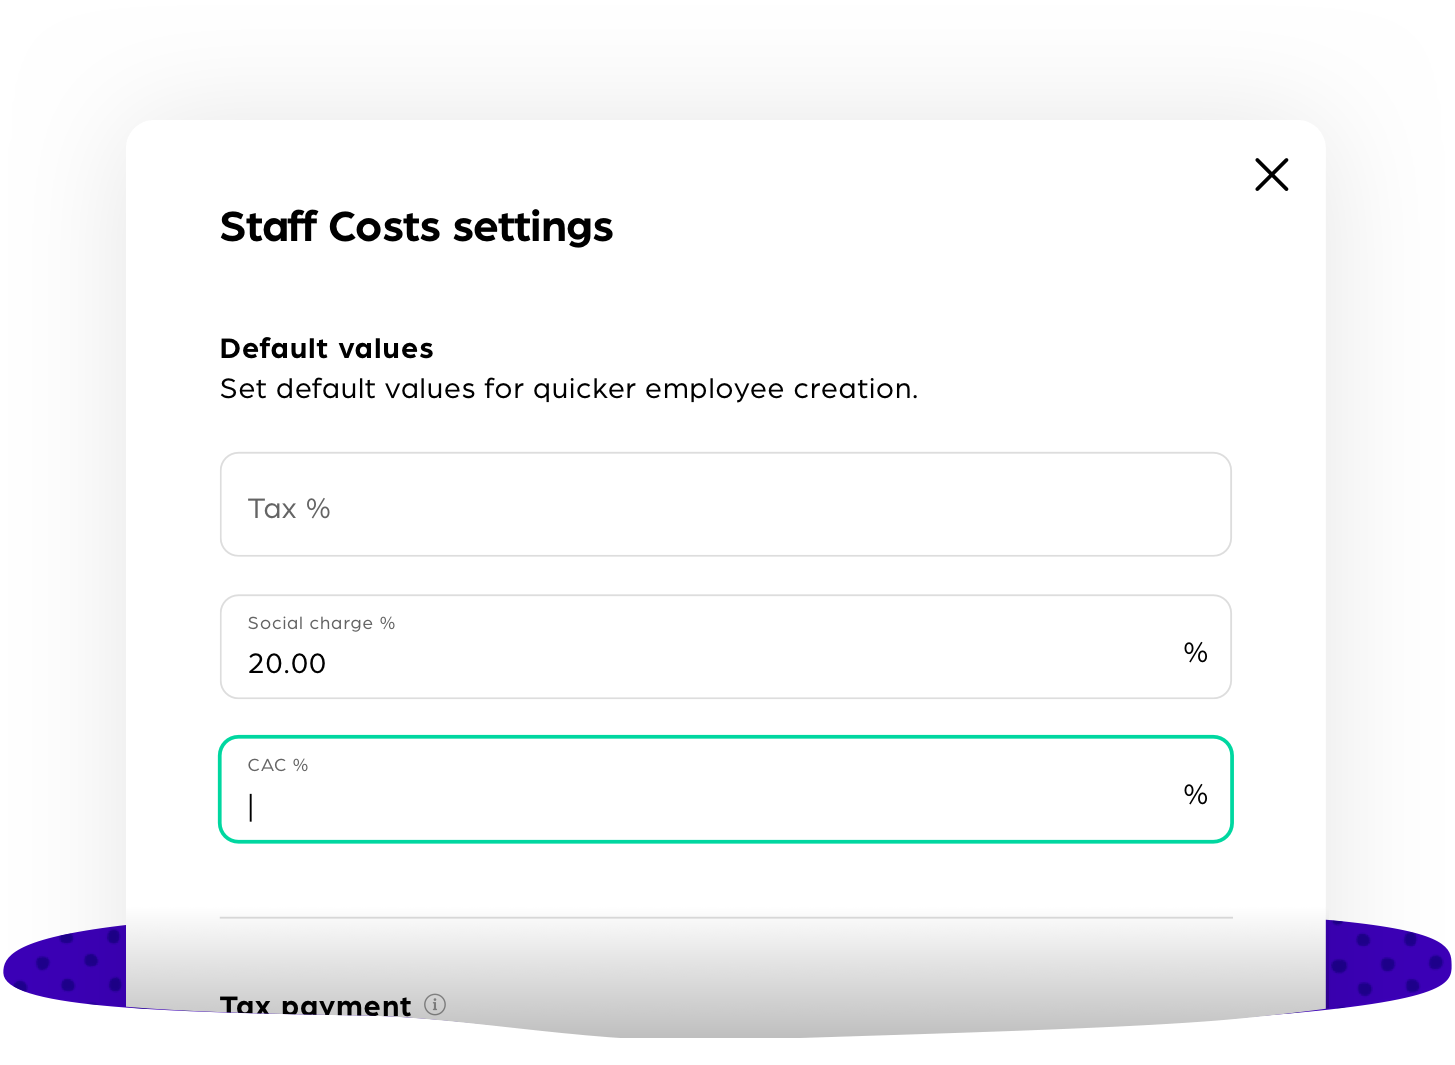 Staff Cost settings@3x